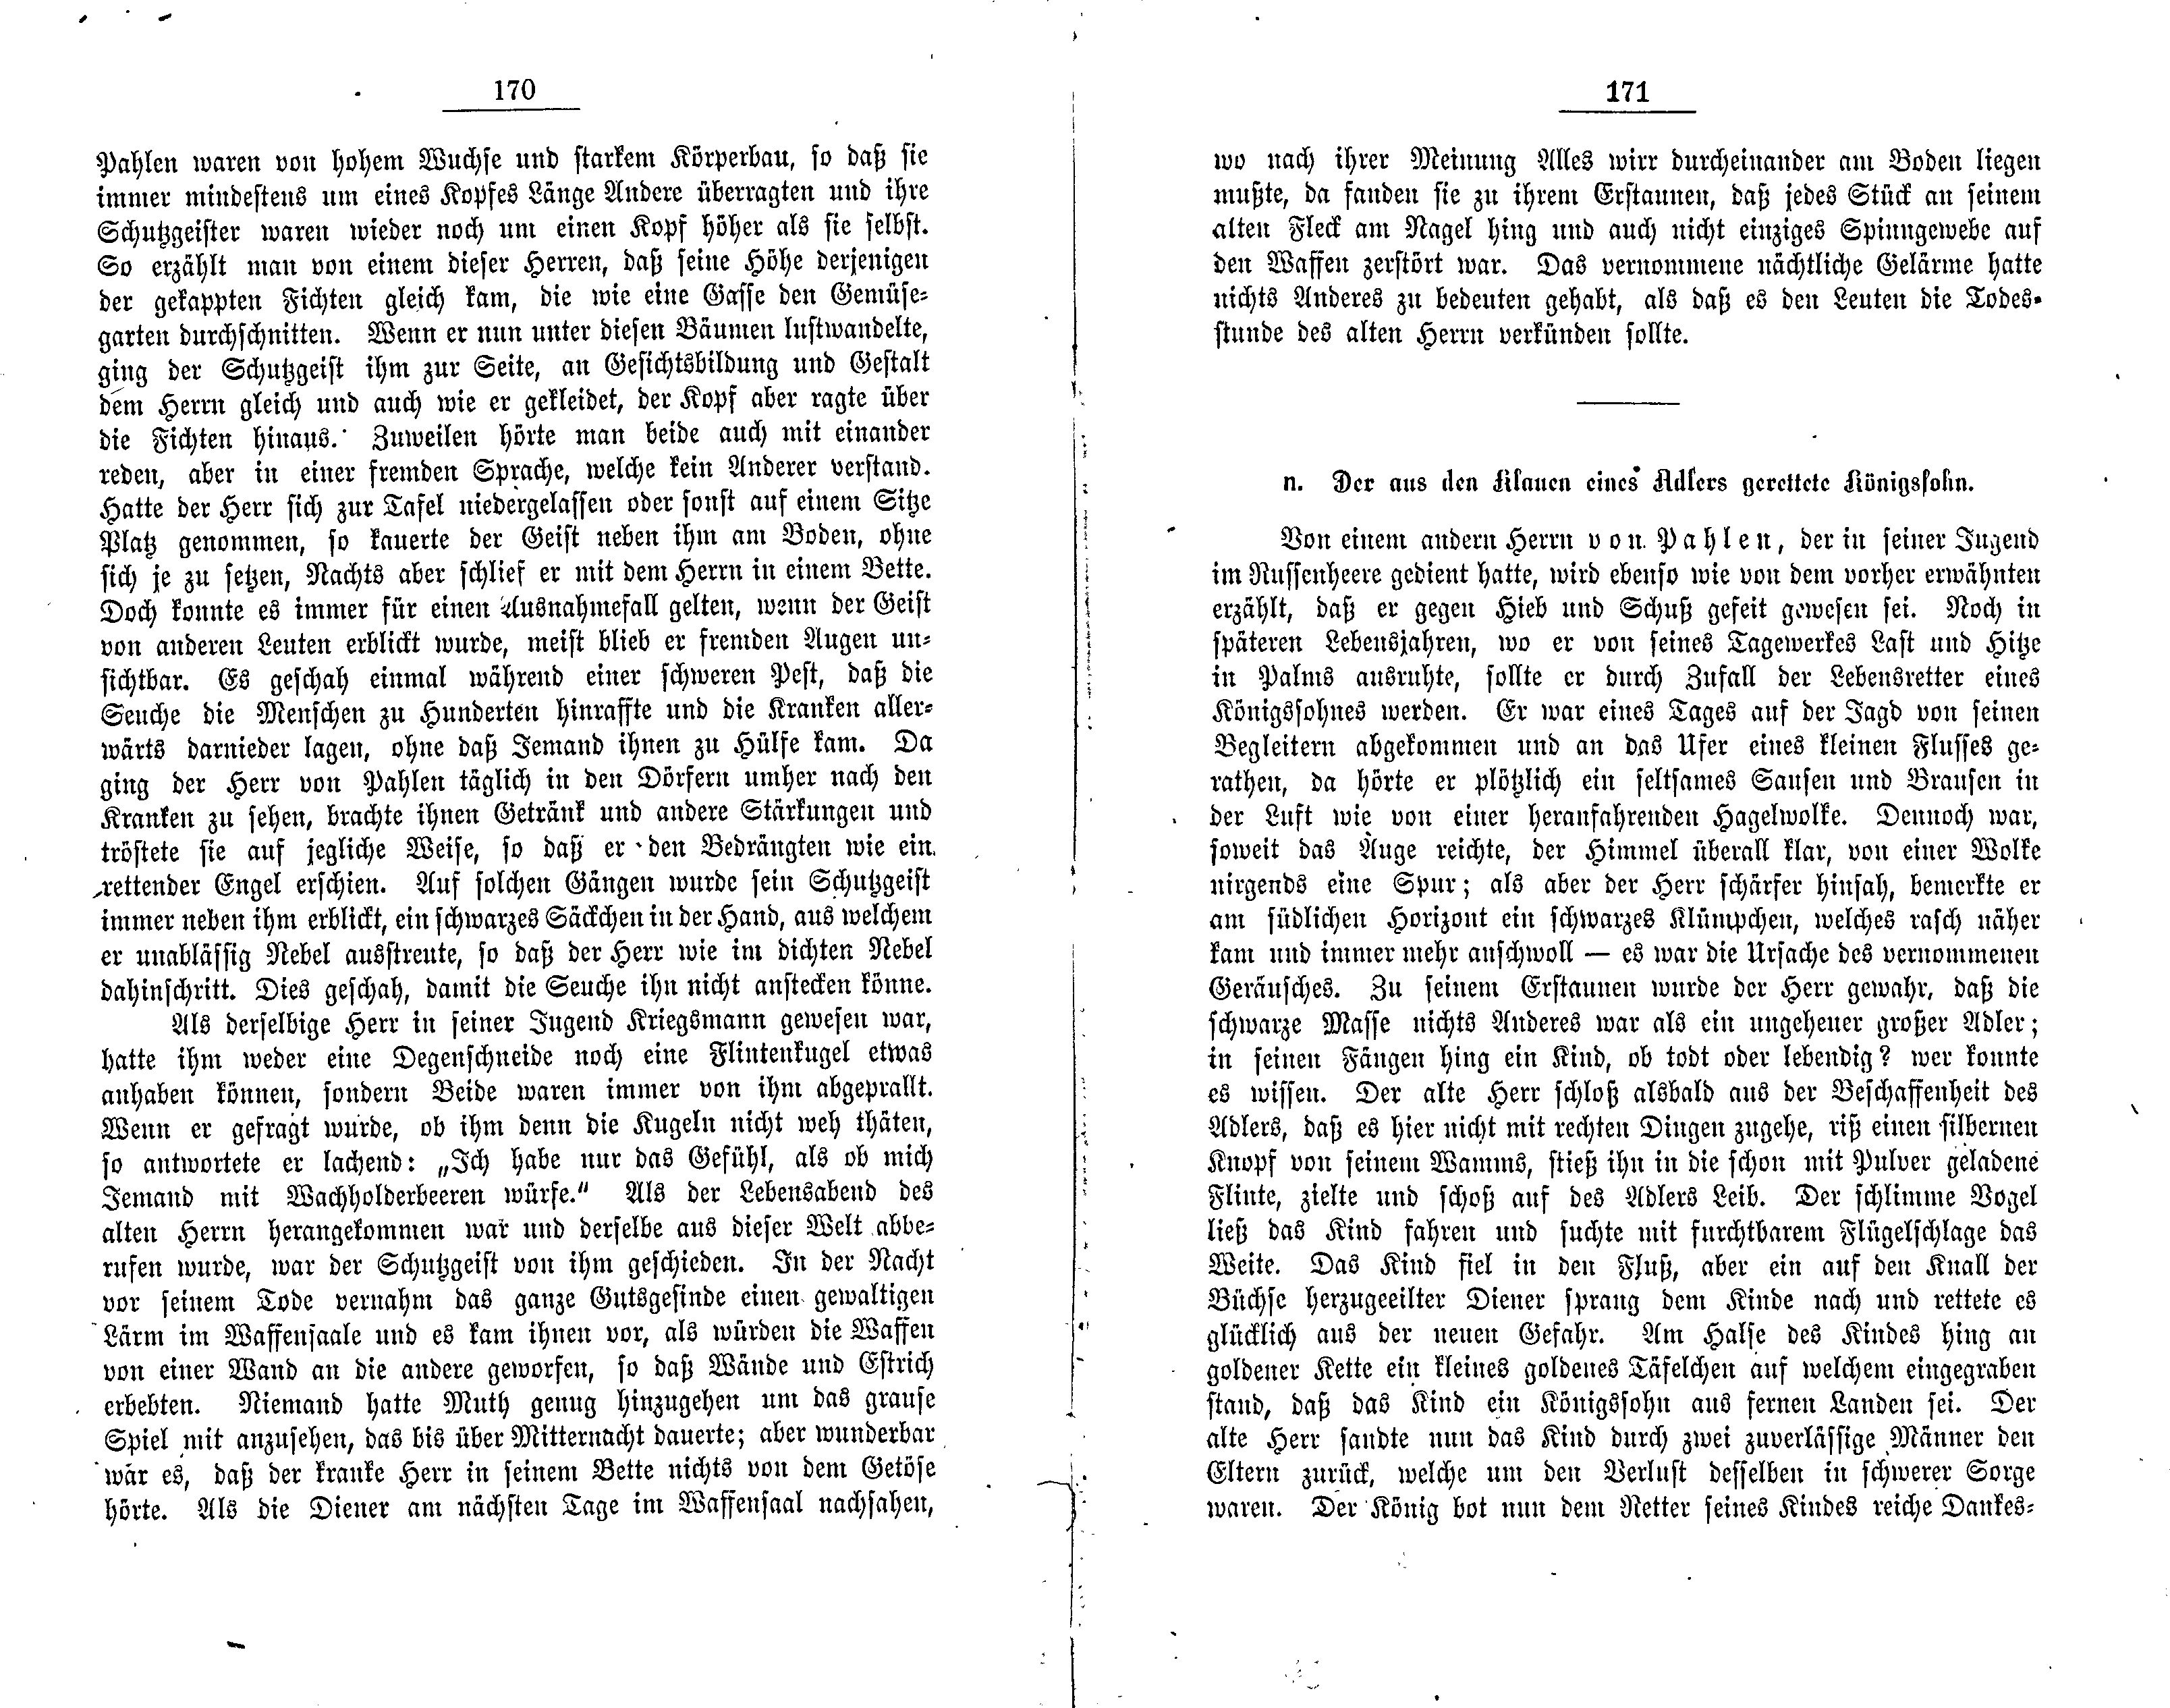 Estnische Märchen [2] (1881) | 89. (170-171) Main body of text